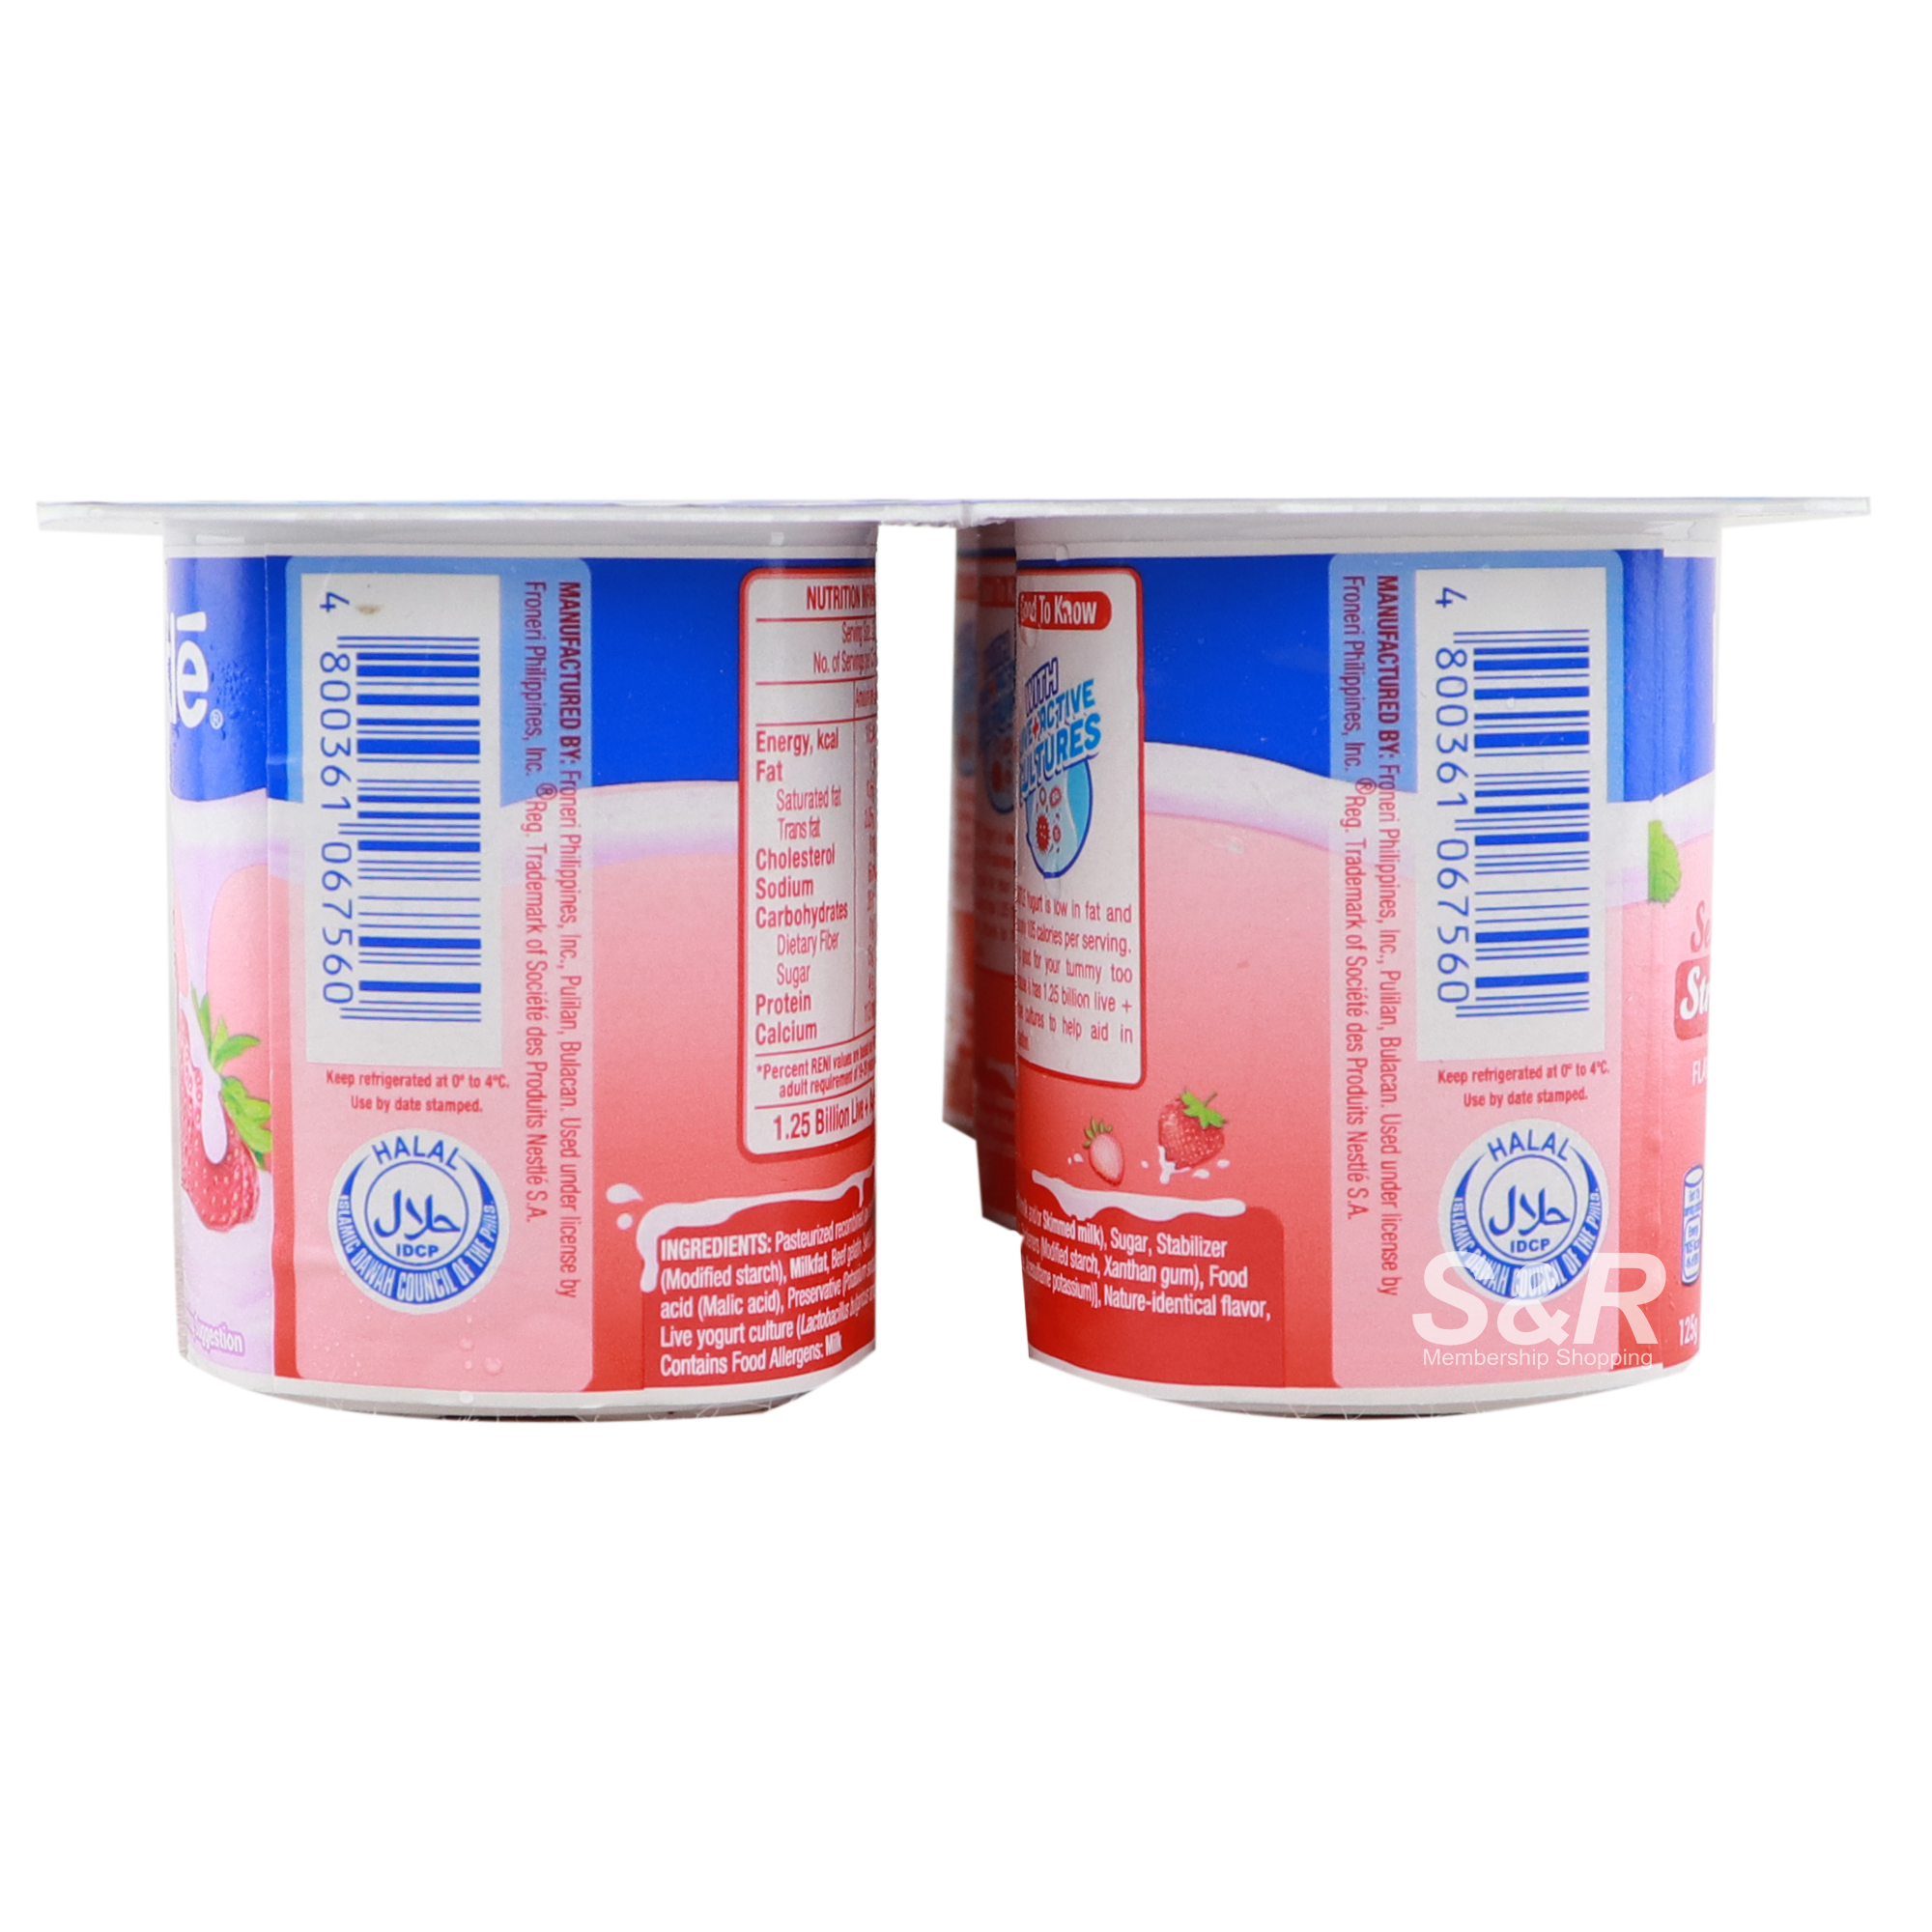 Strawberry Flavored Yogurt